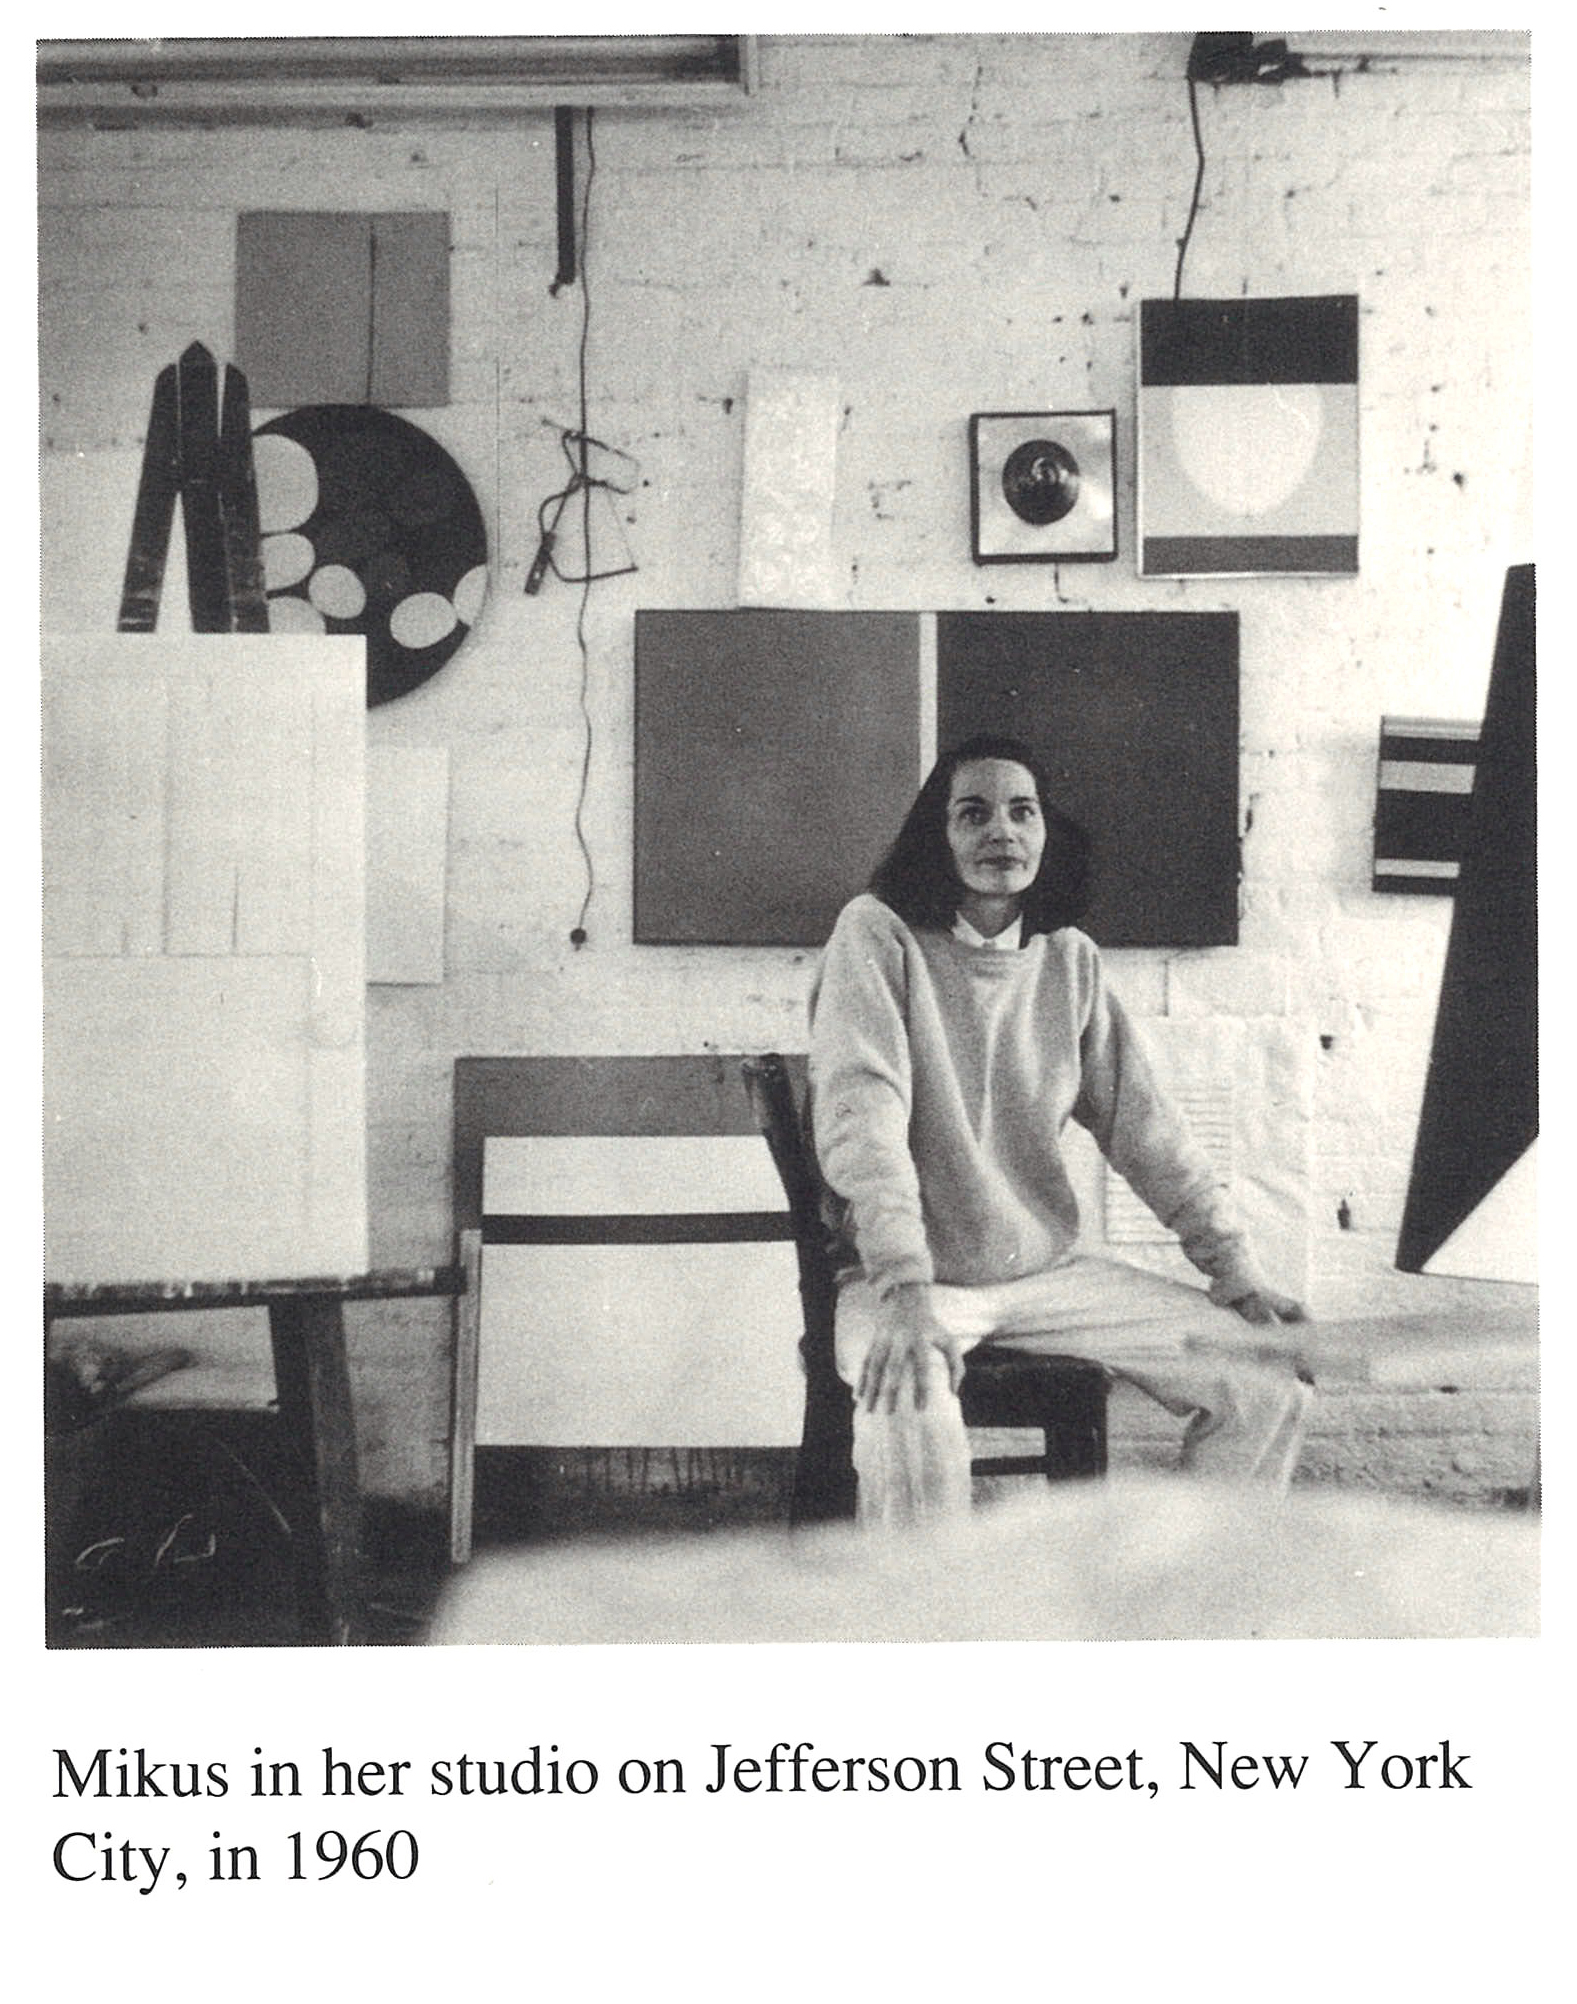 Archival image of Eleanor Mikus sitting amongst her works in her Jefferson Street studio